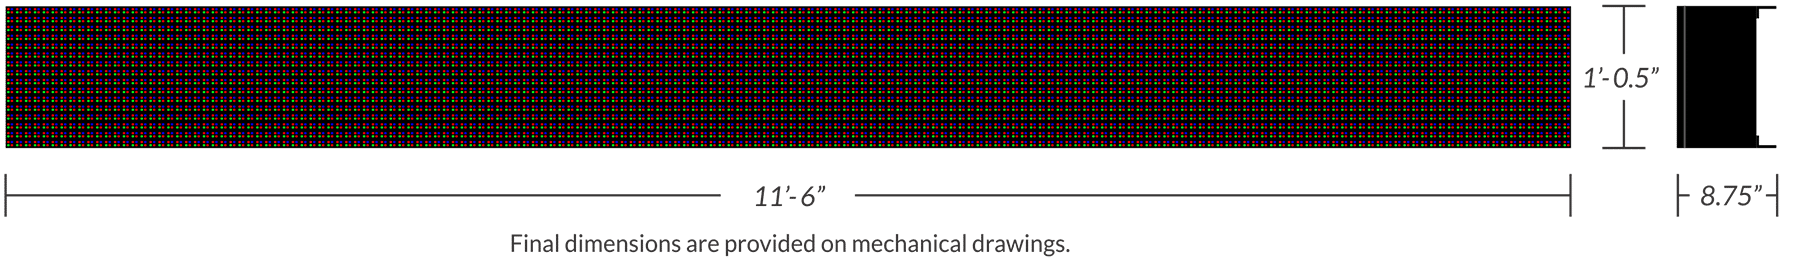 16x176 Standard Resolution Panel